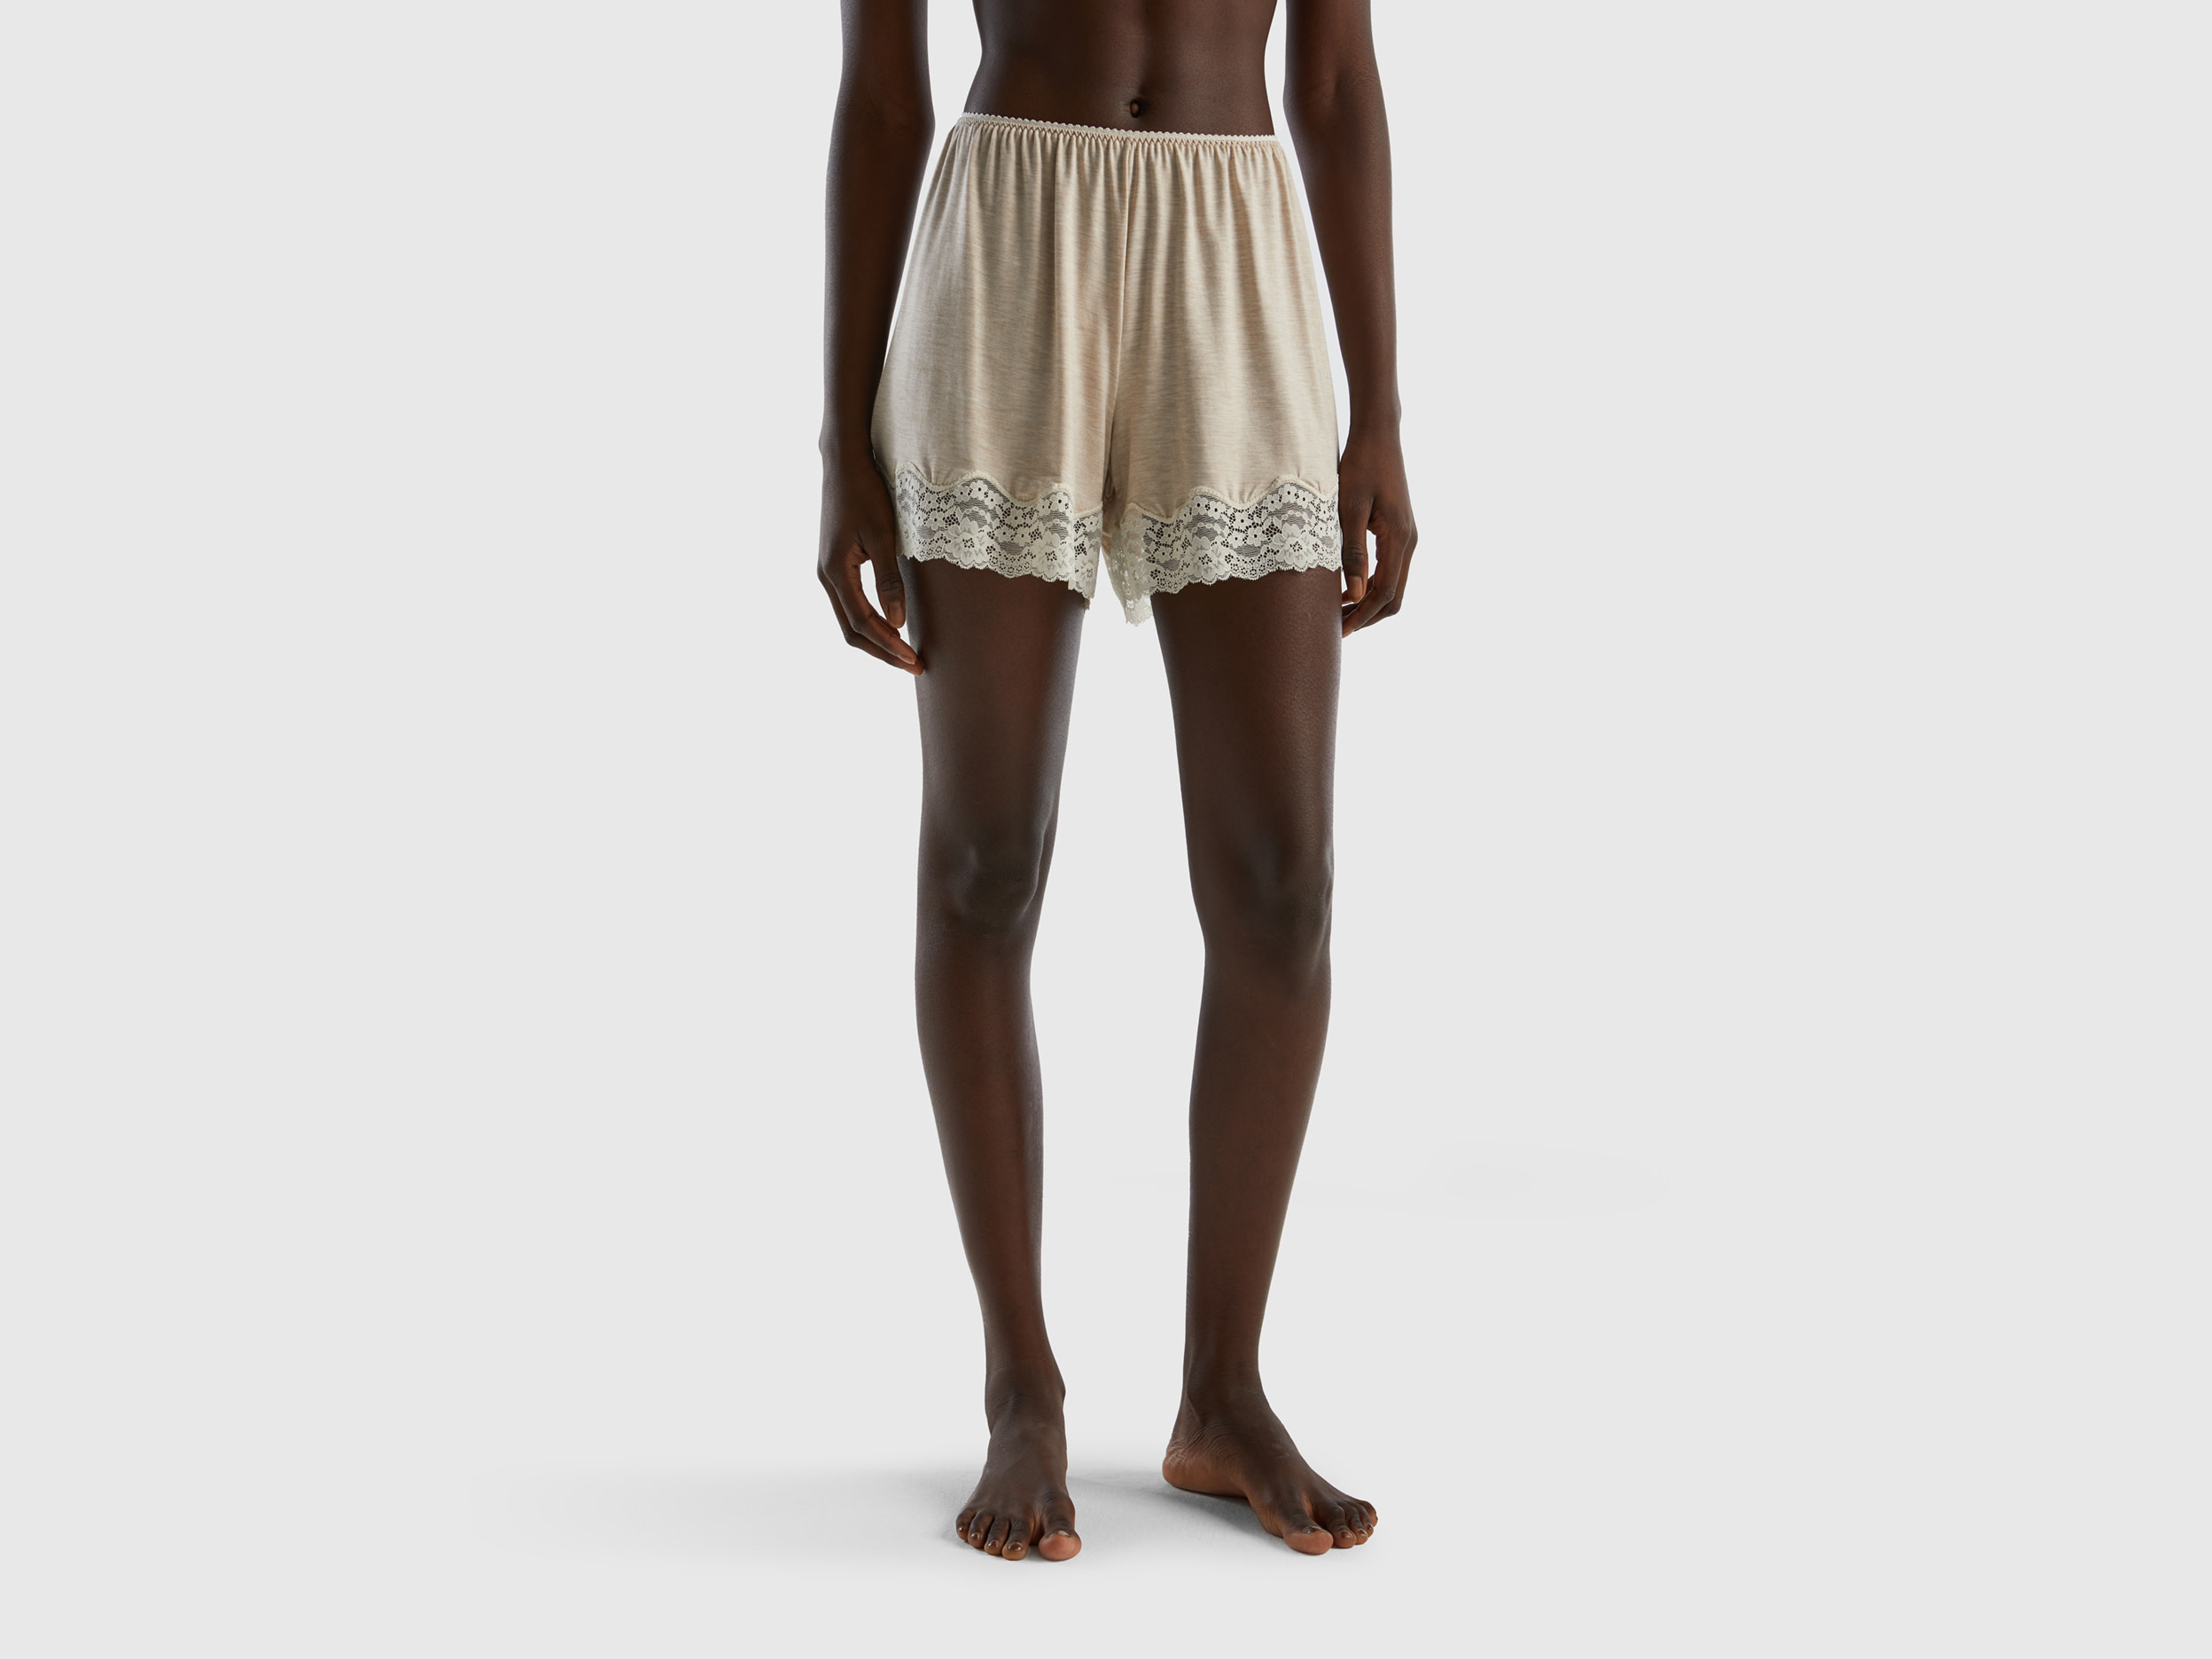 Benetton, Flowy Shorts With Lace, size S, Beige, Women